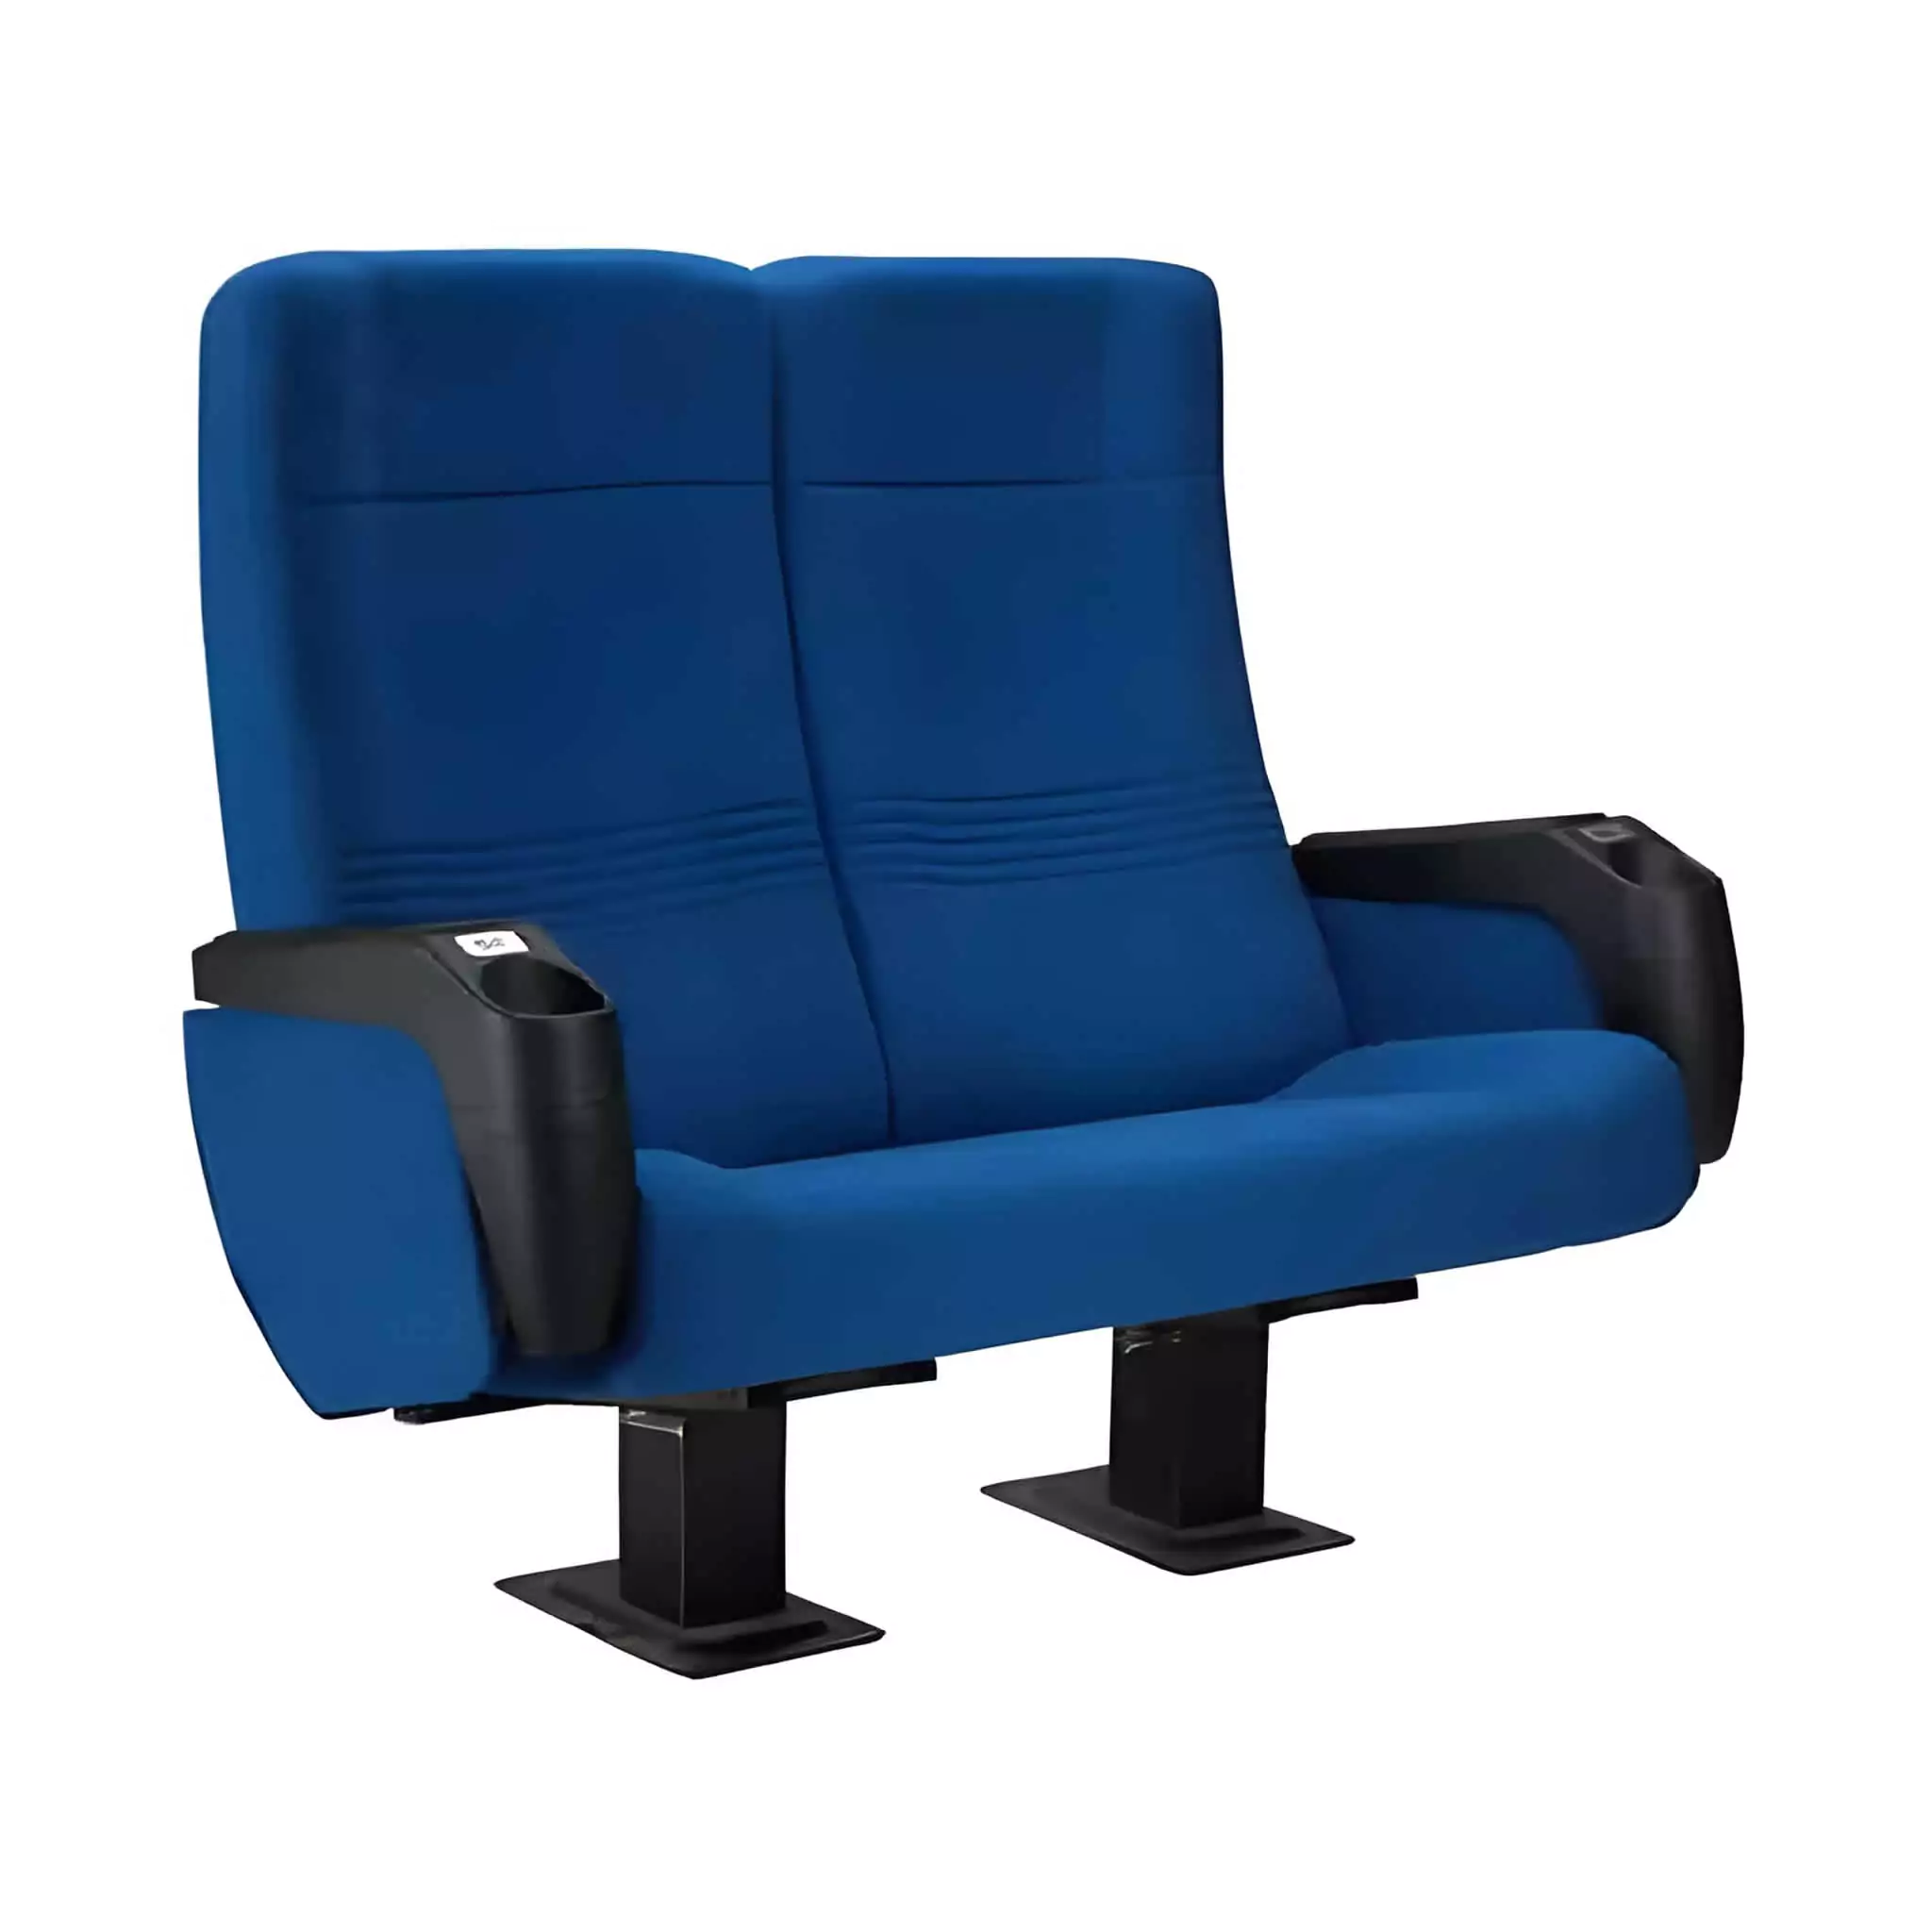 Simko Seating Product Cinema Seat Lapis L Twin